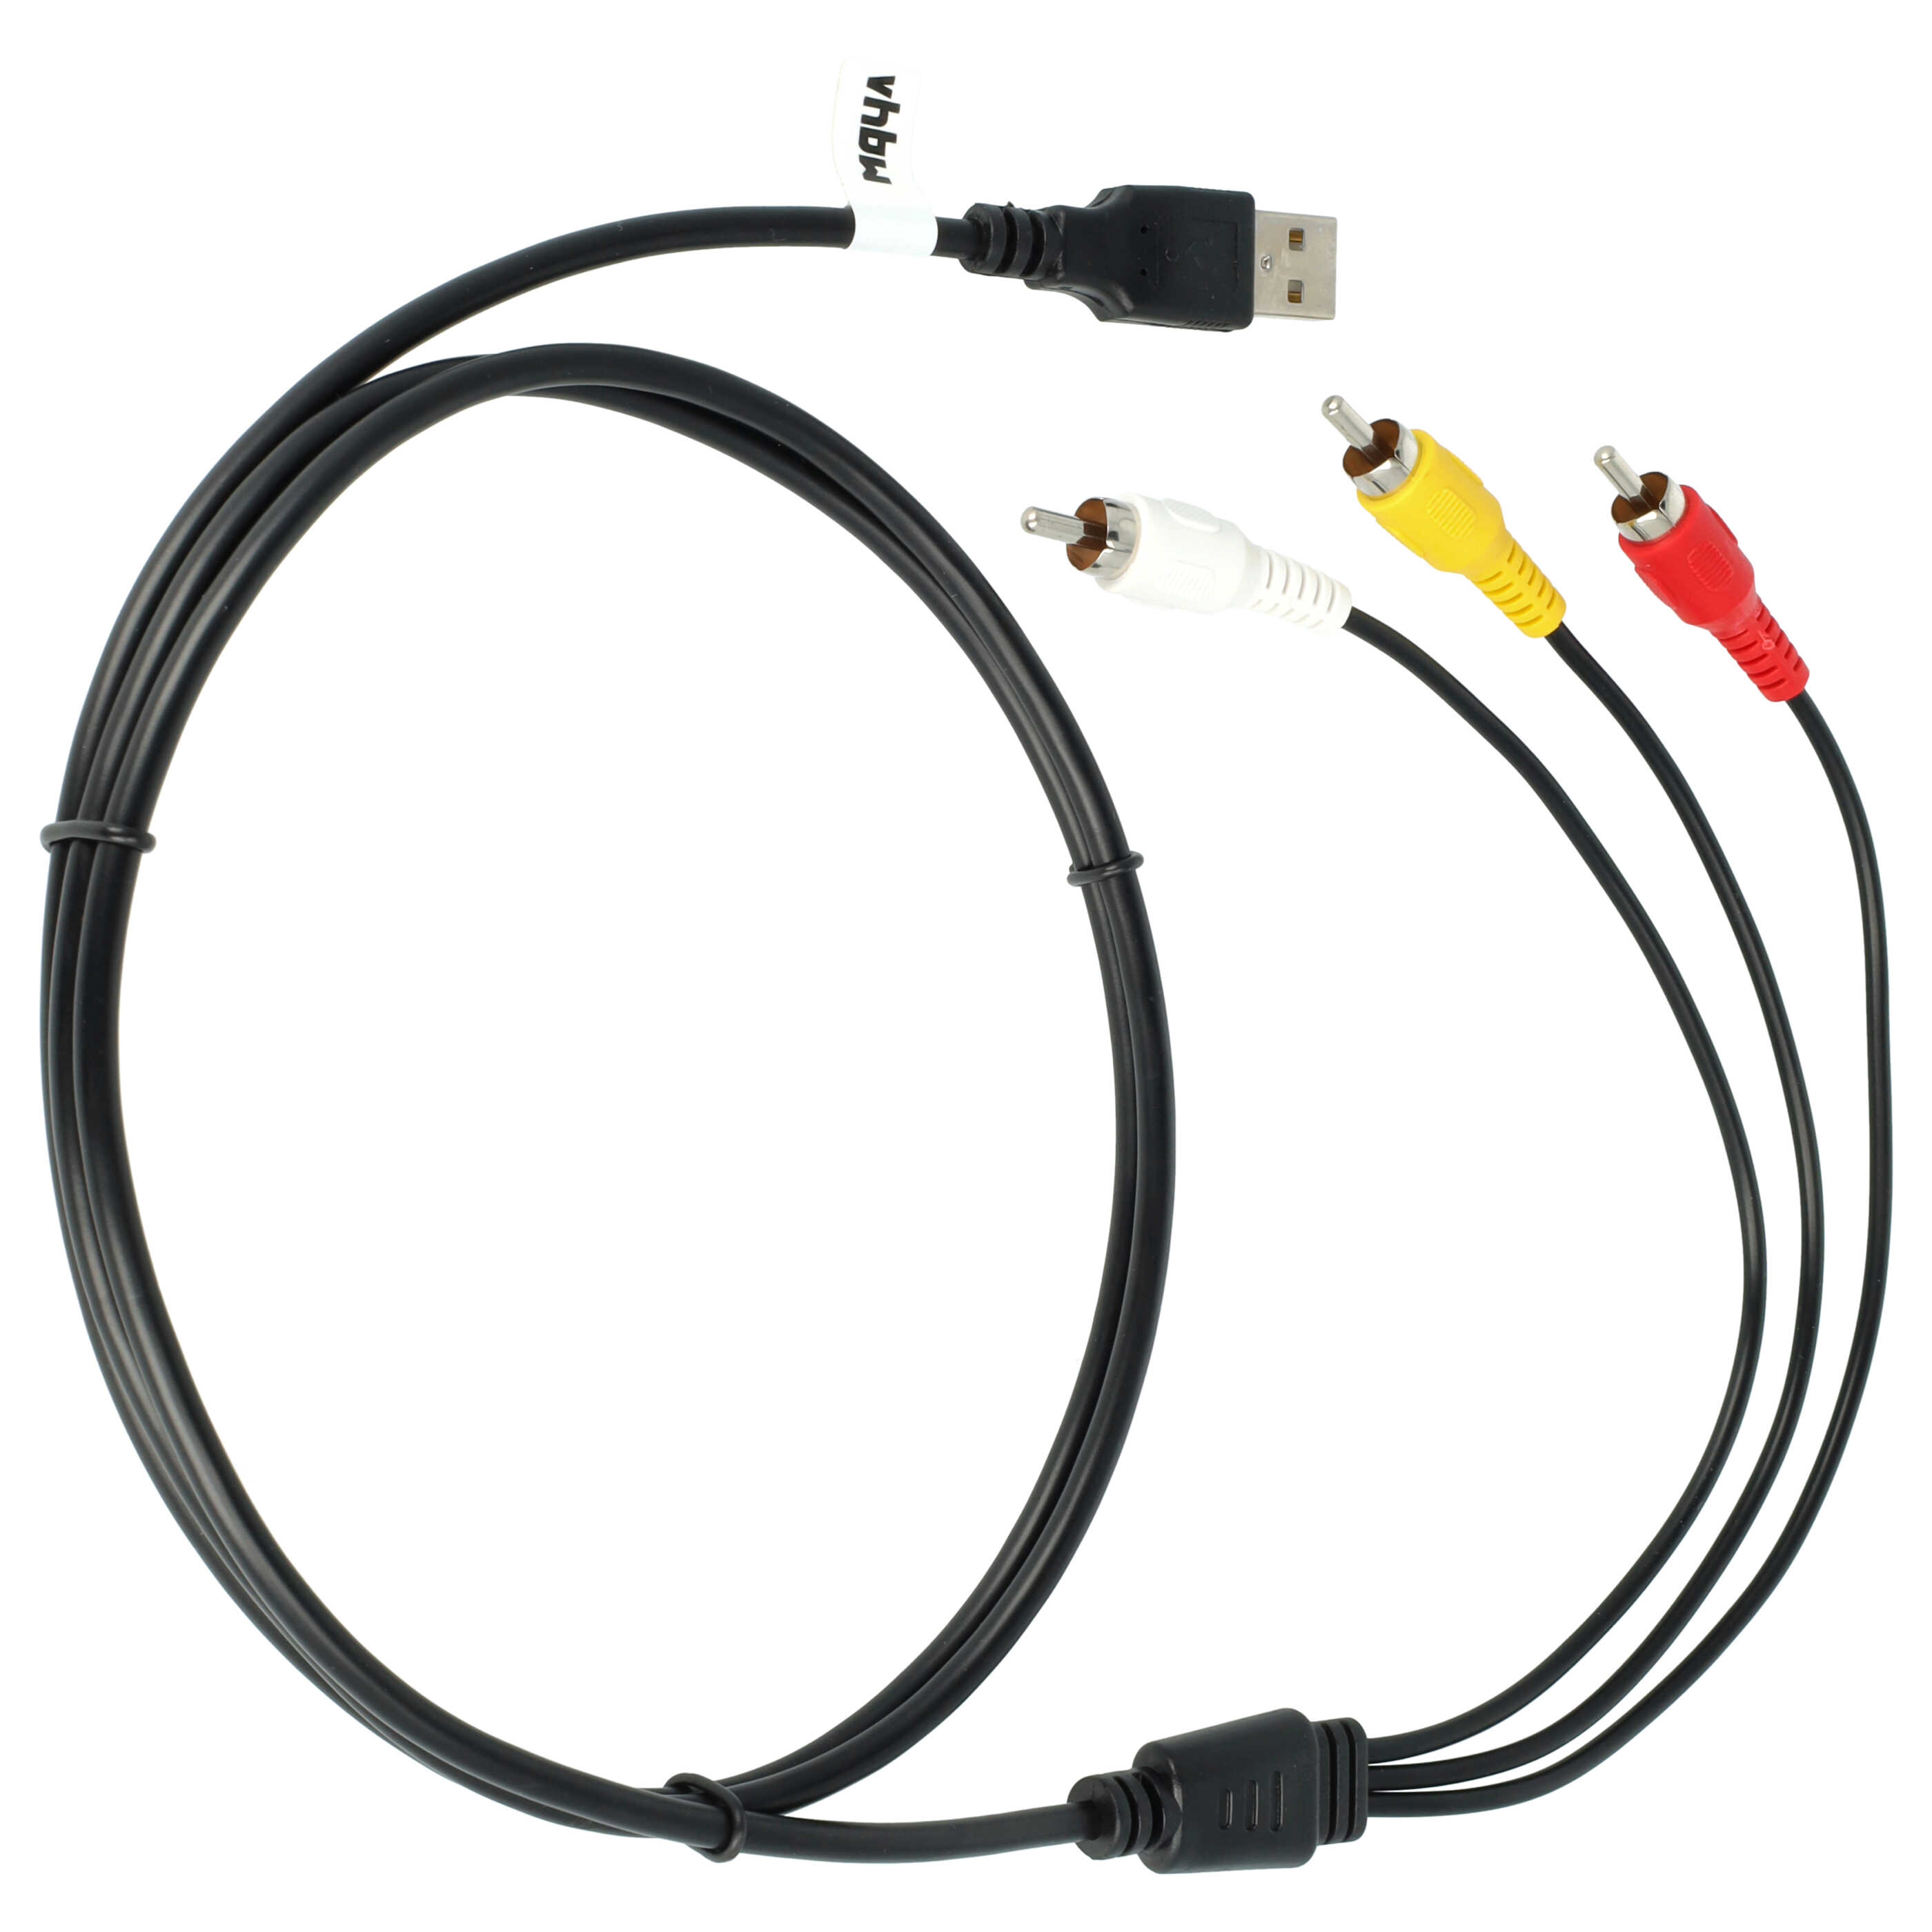 vhbw USB auf Cinch AV-Kabel kompatibel mit HDD-Playern, Stereo-AV-Anlagen - USB A 2.0 Stecker auf 3 Cinch Stec